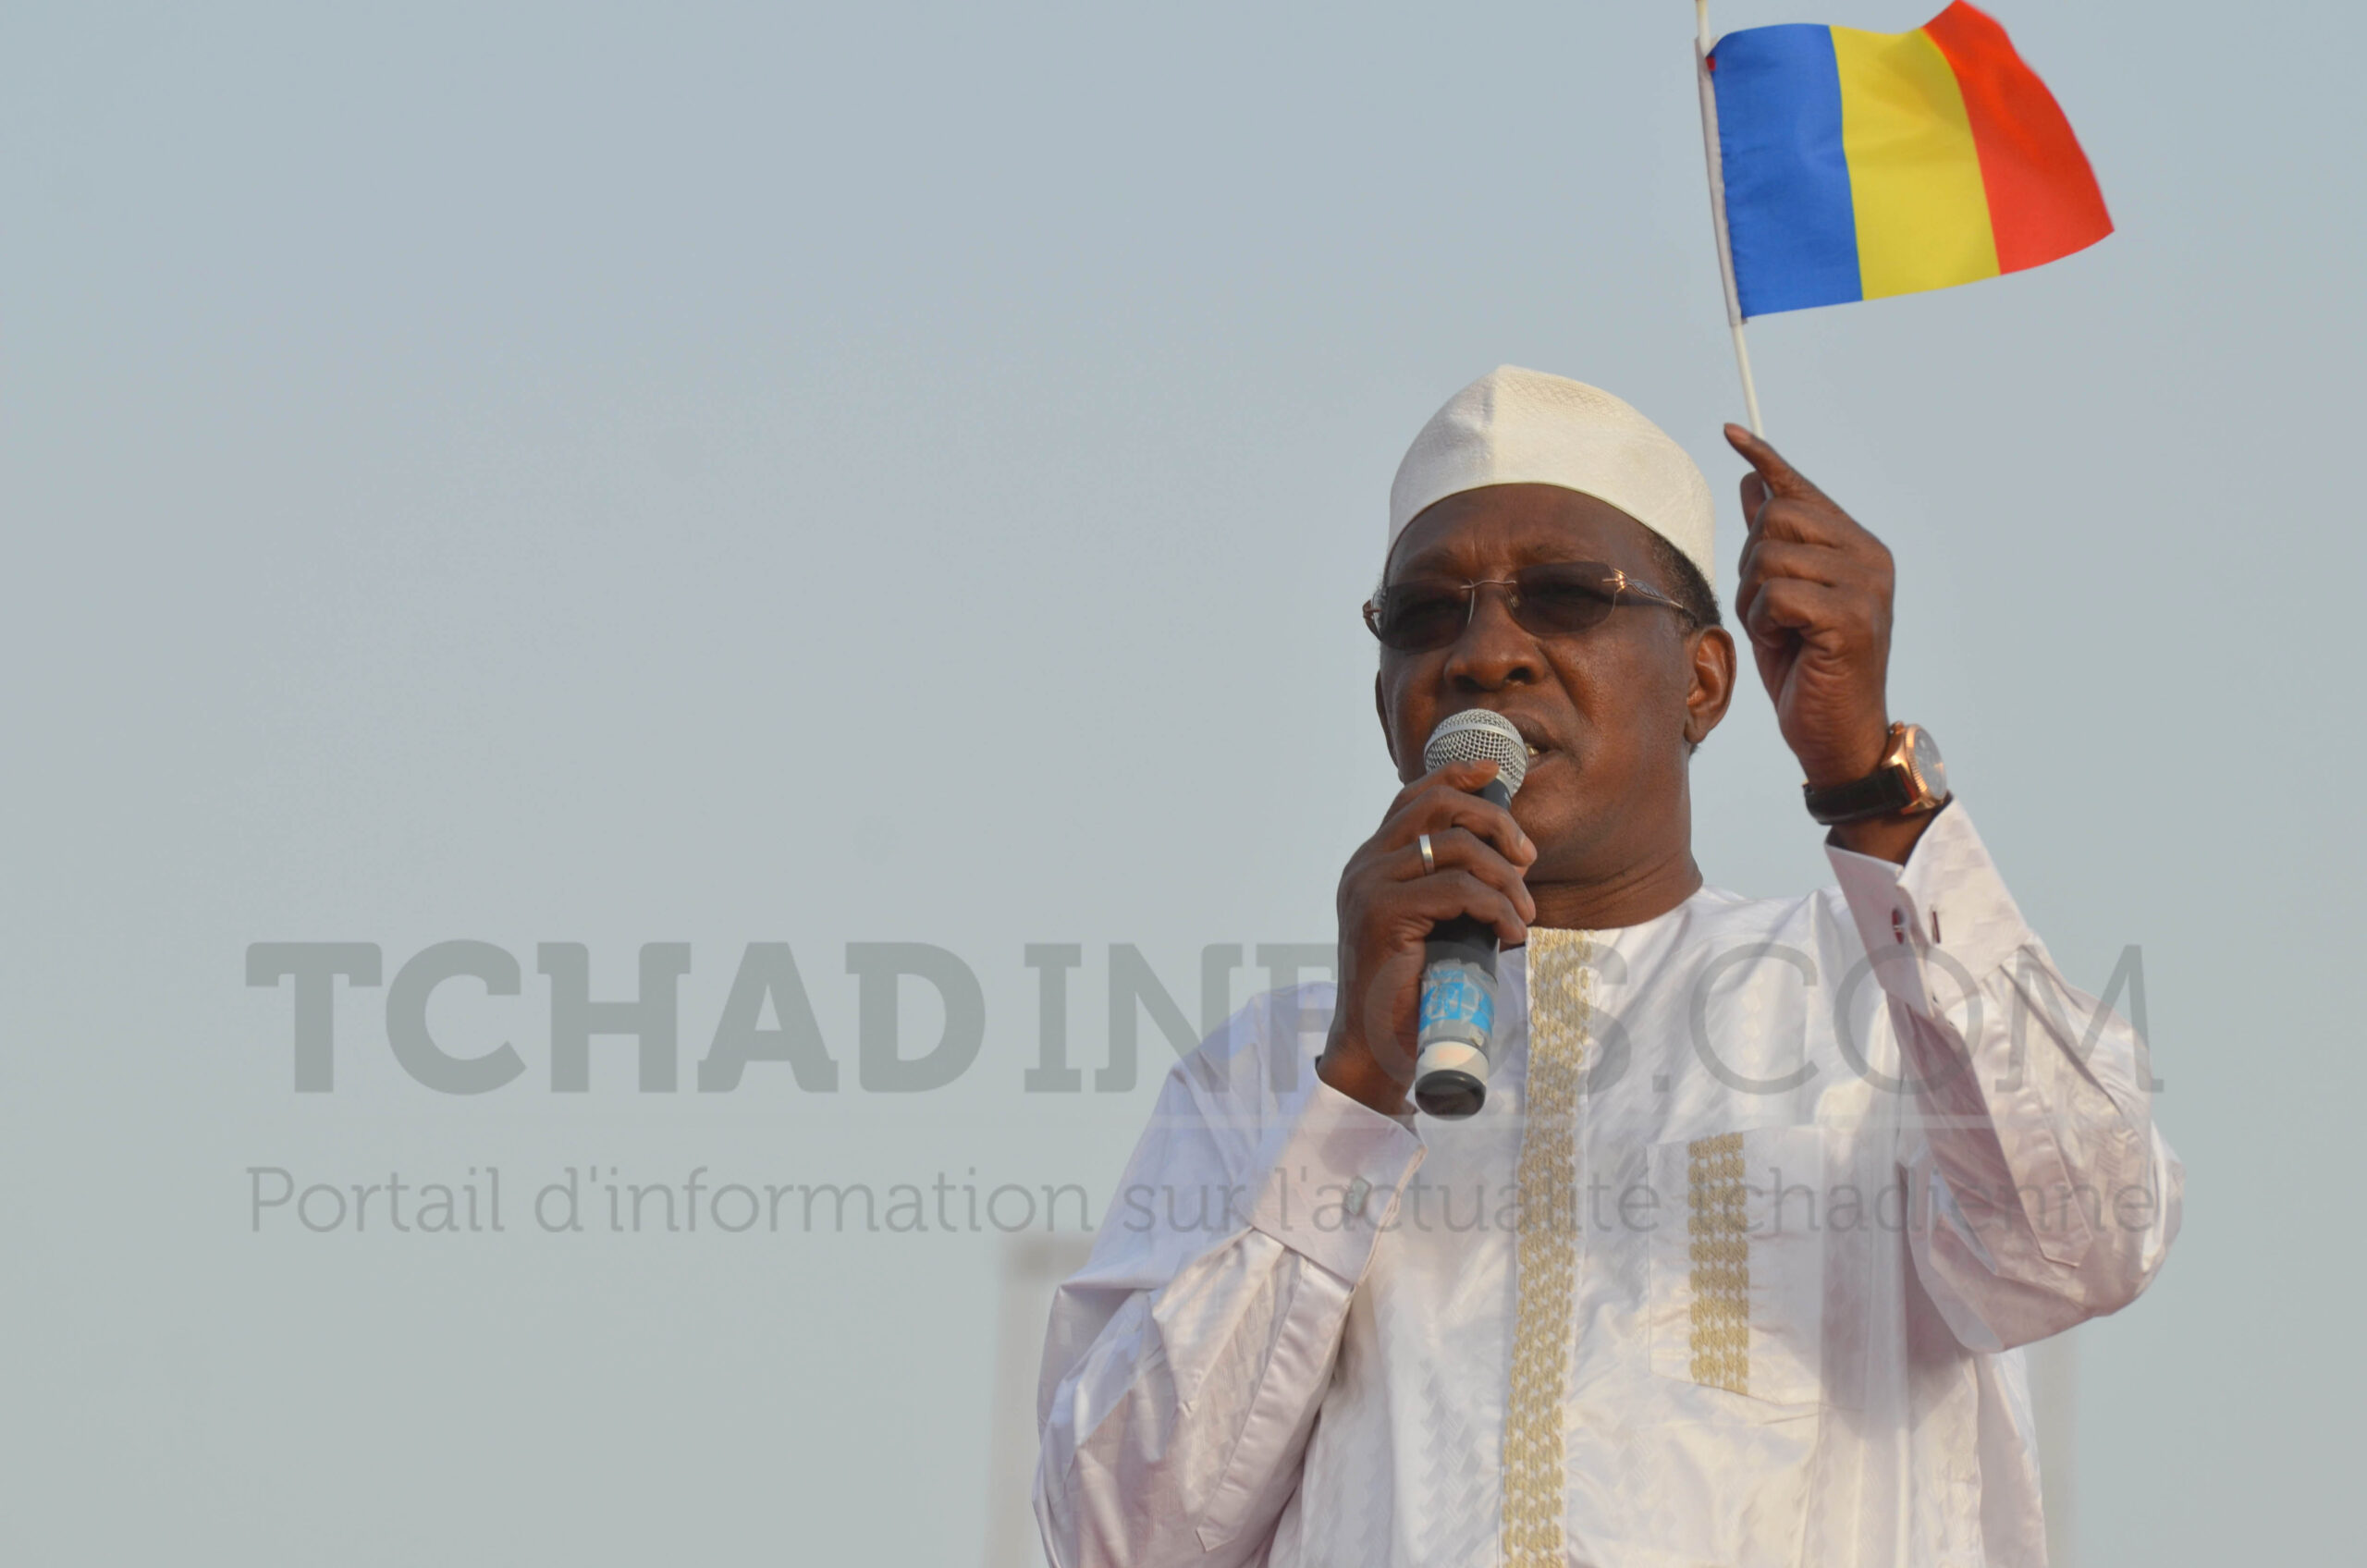 « Tchadiens dormez, ne craignez rien » rassure Idriss Déby Itno